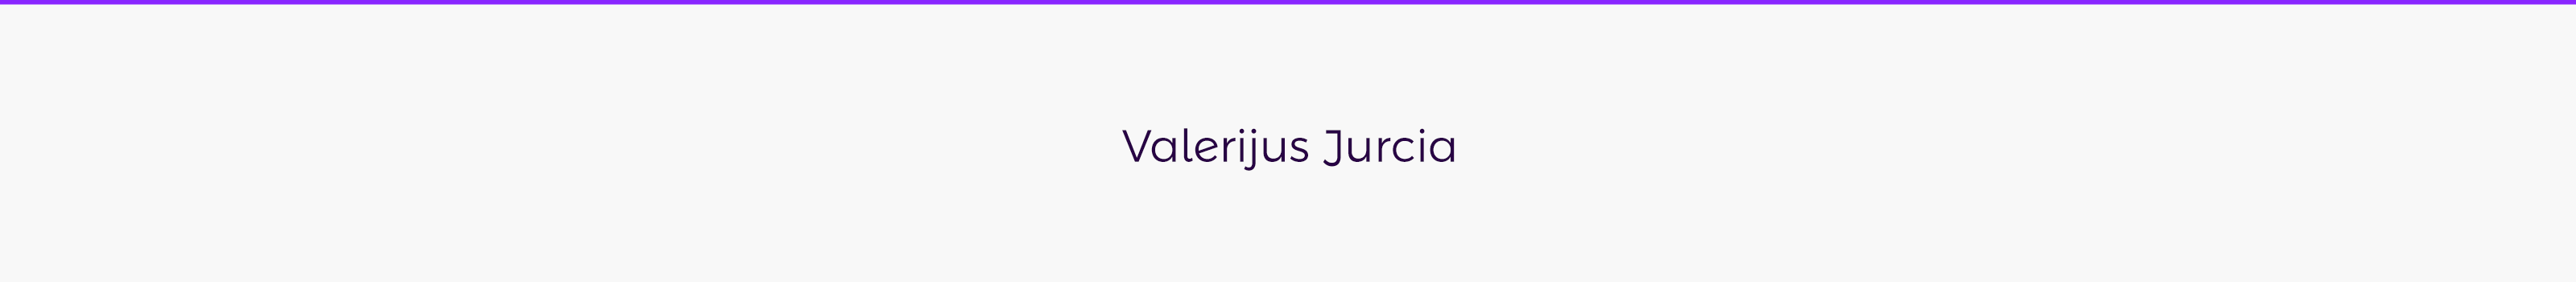 Valerijus Jurcia 的个人资料横幅